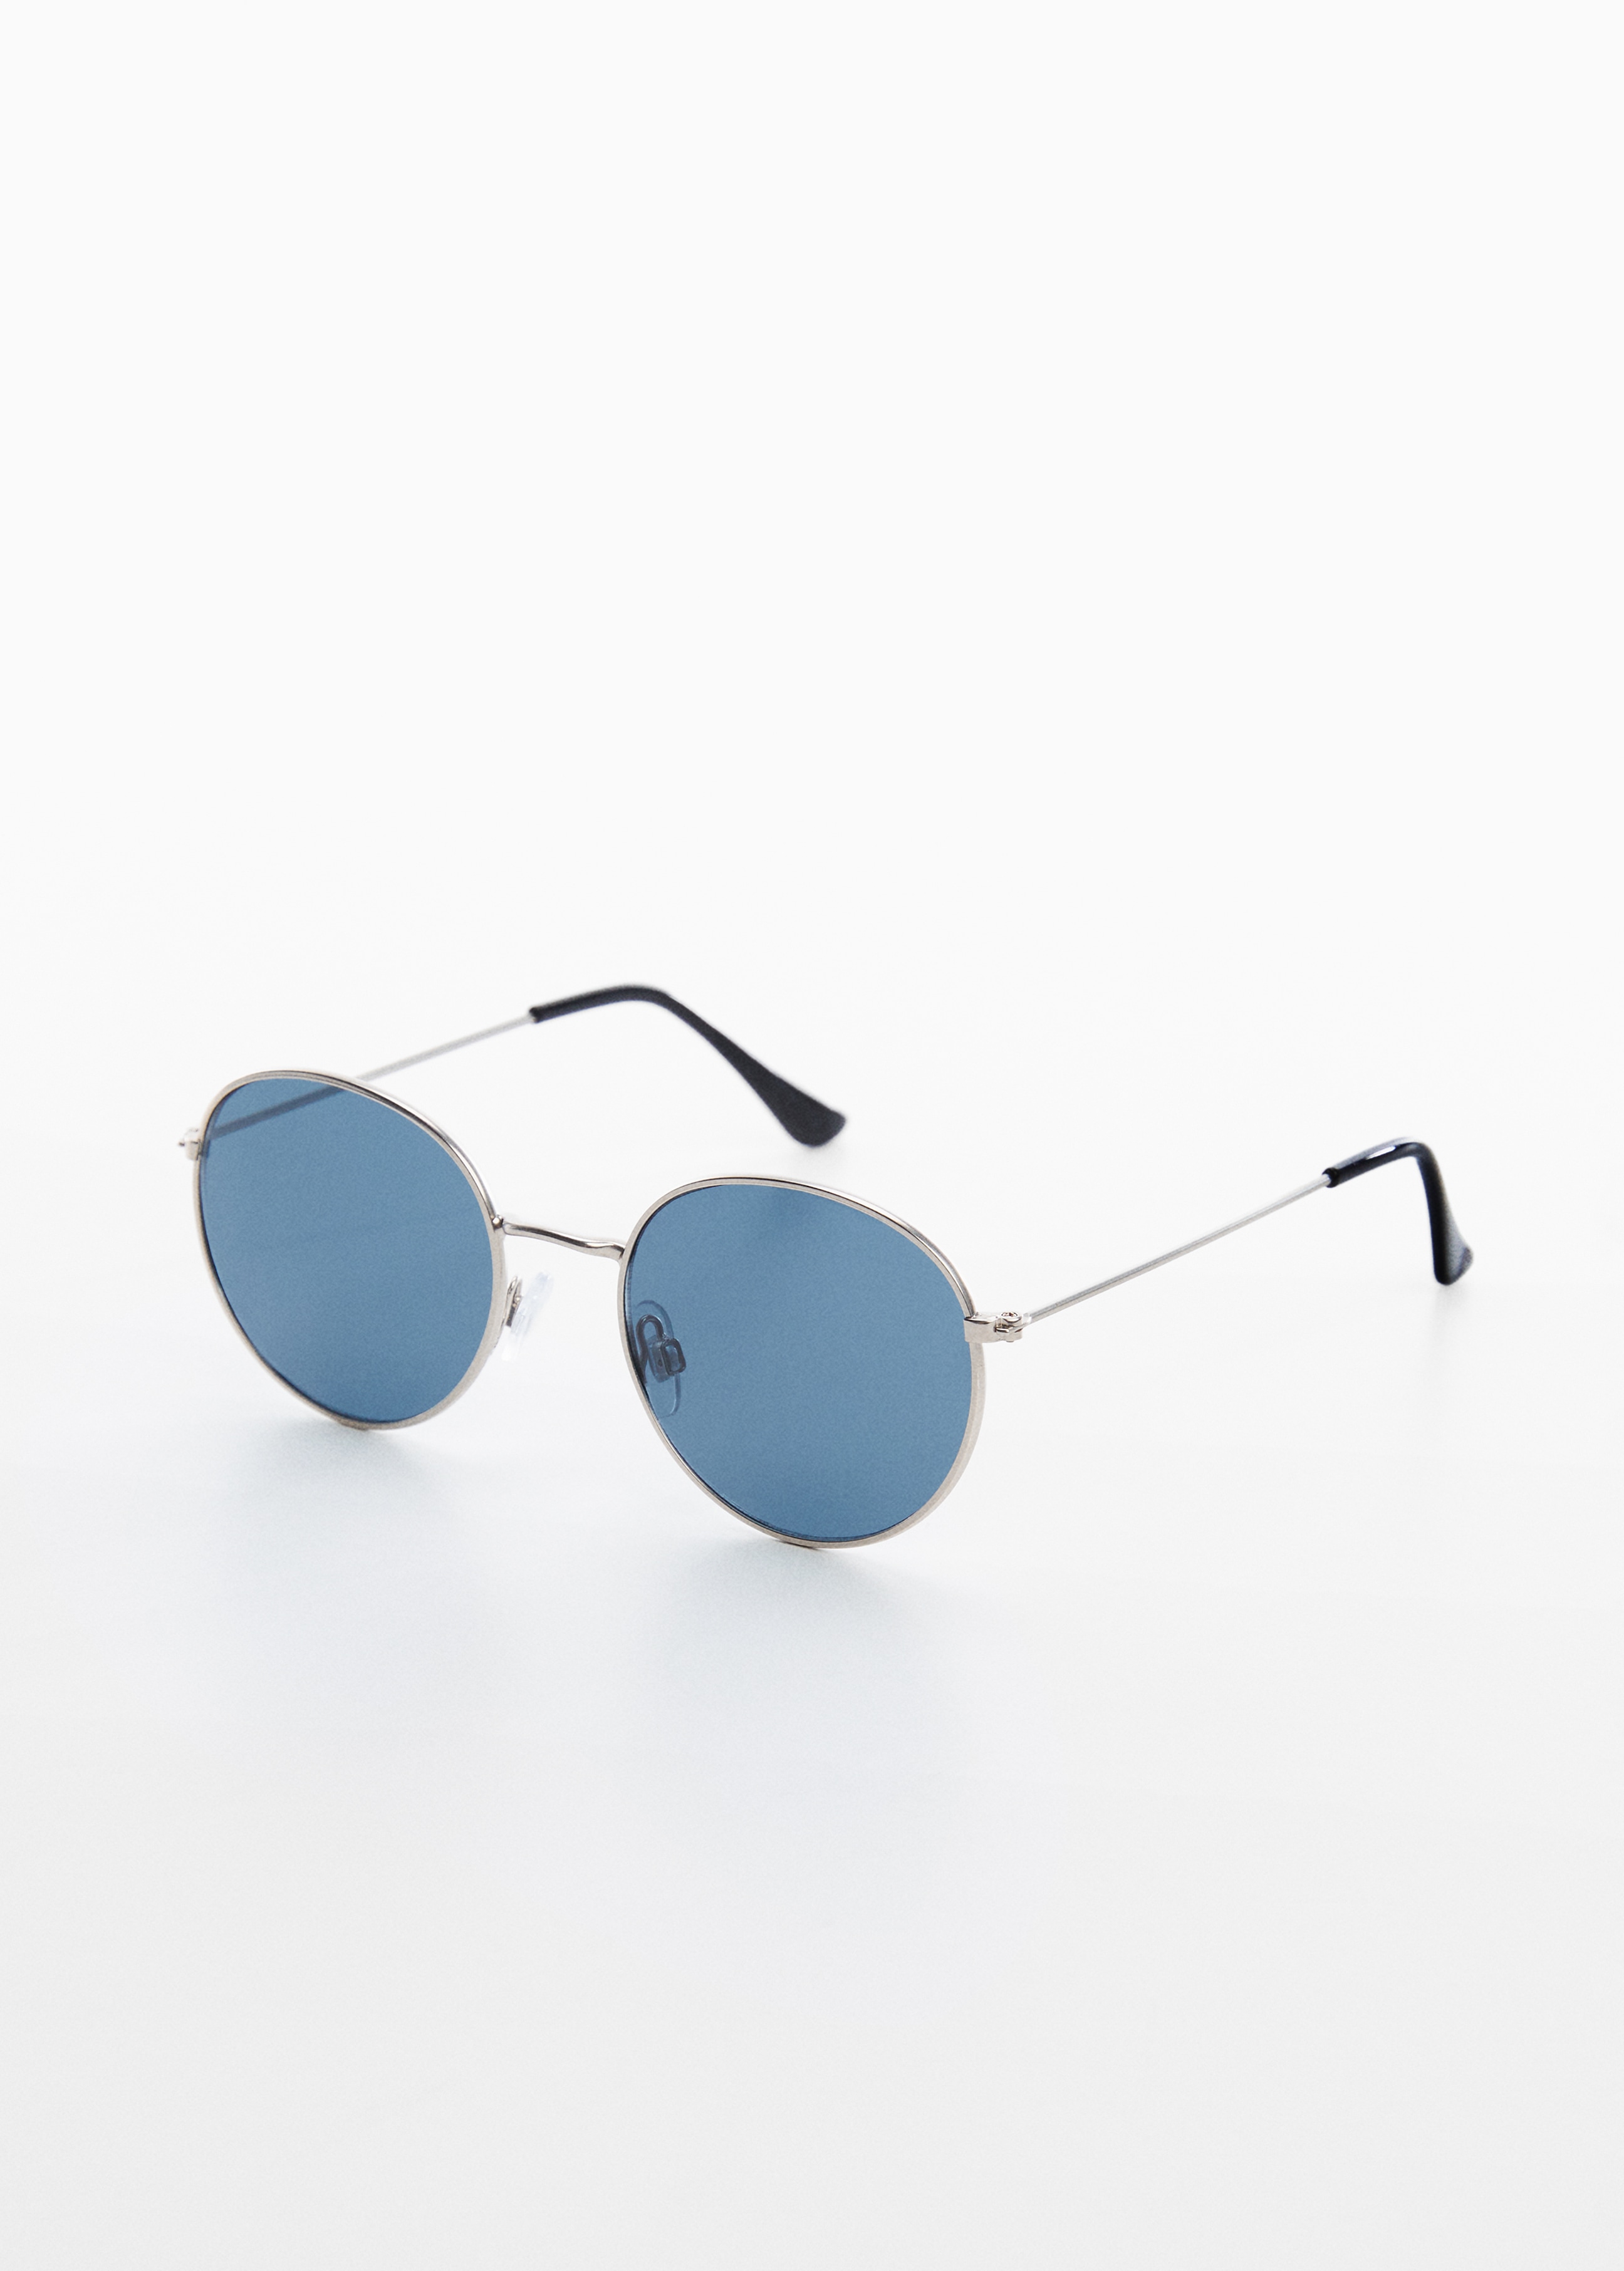 Aviator frame sunglasses - Medium plane